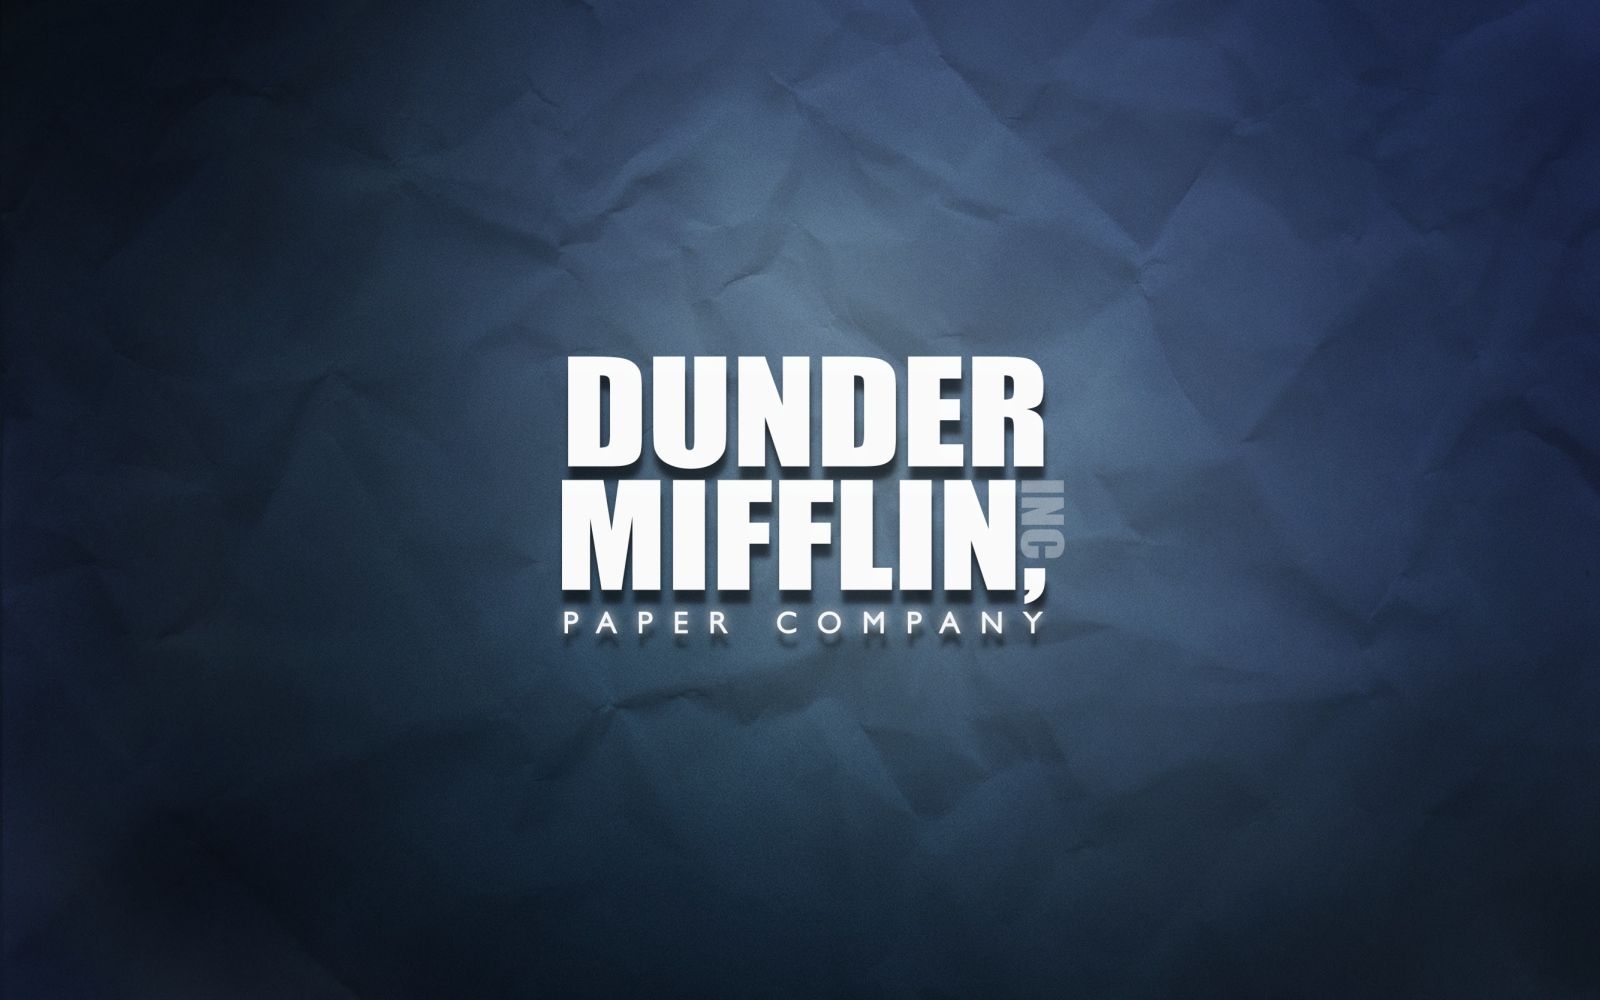 Their desktop wallpapers change when Sabre buys out Dunder Mifflin. : r/ DunderMifflin